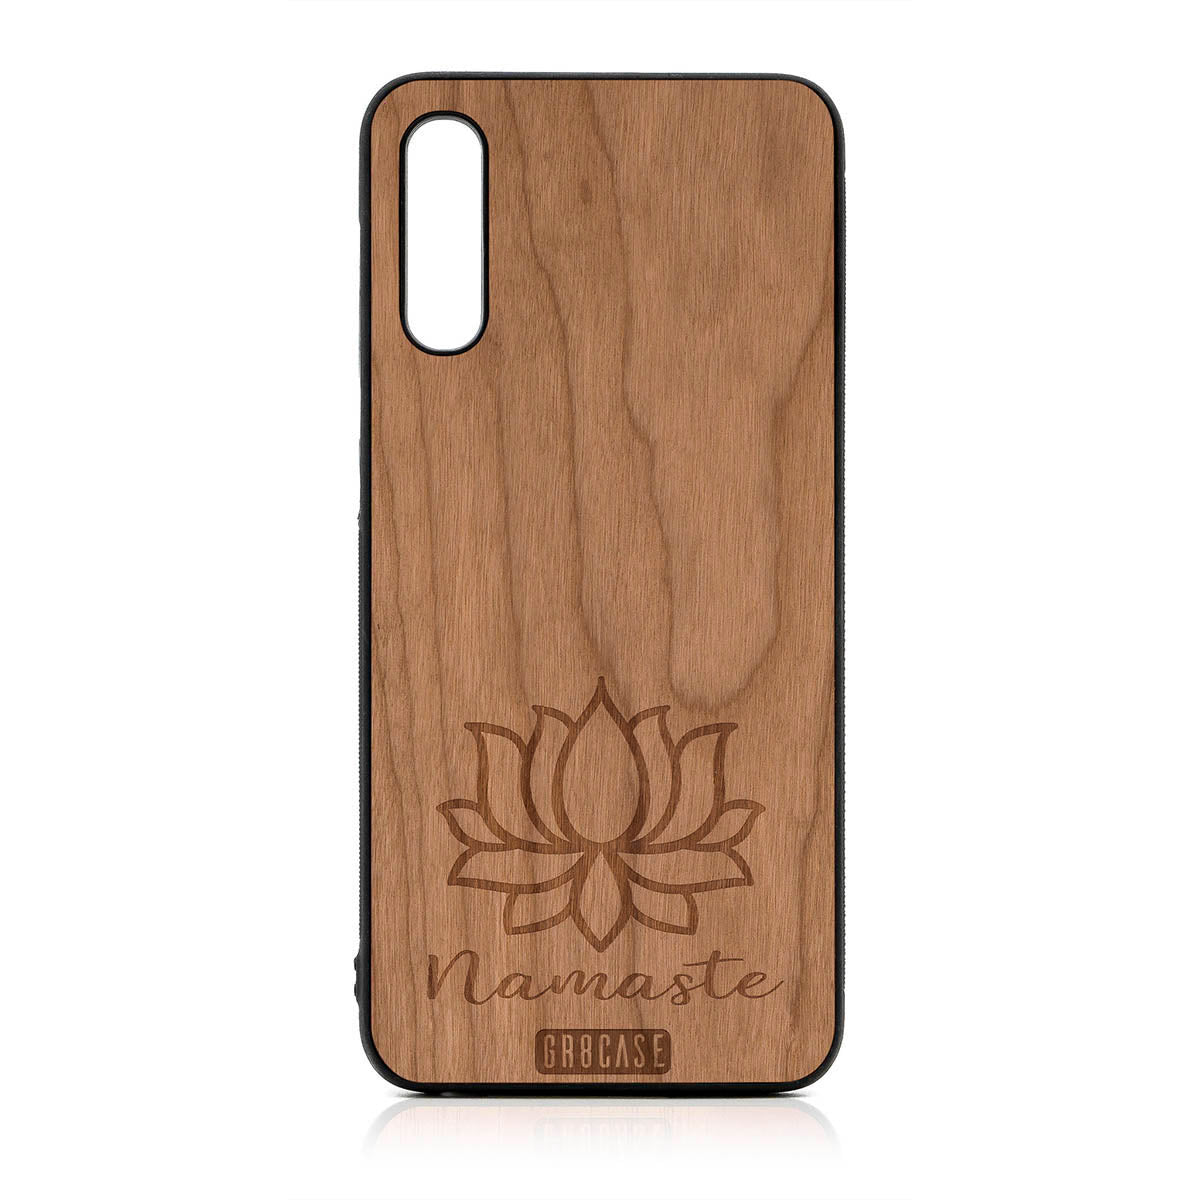 Namaste (Lotus Flower) Design Wood Case For Samsung Galaxy A50